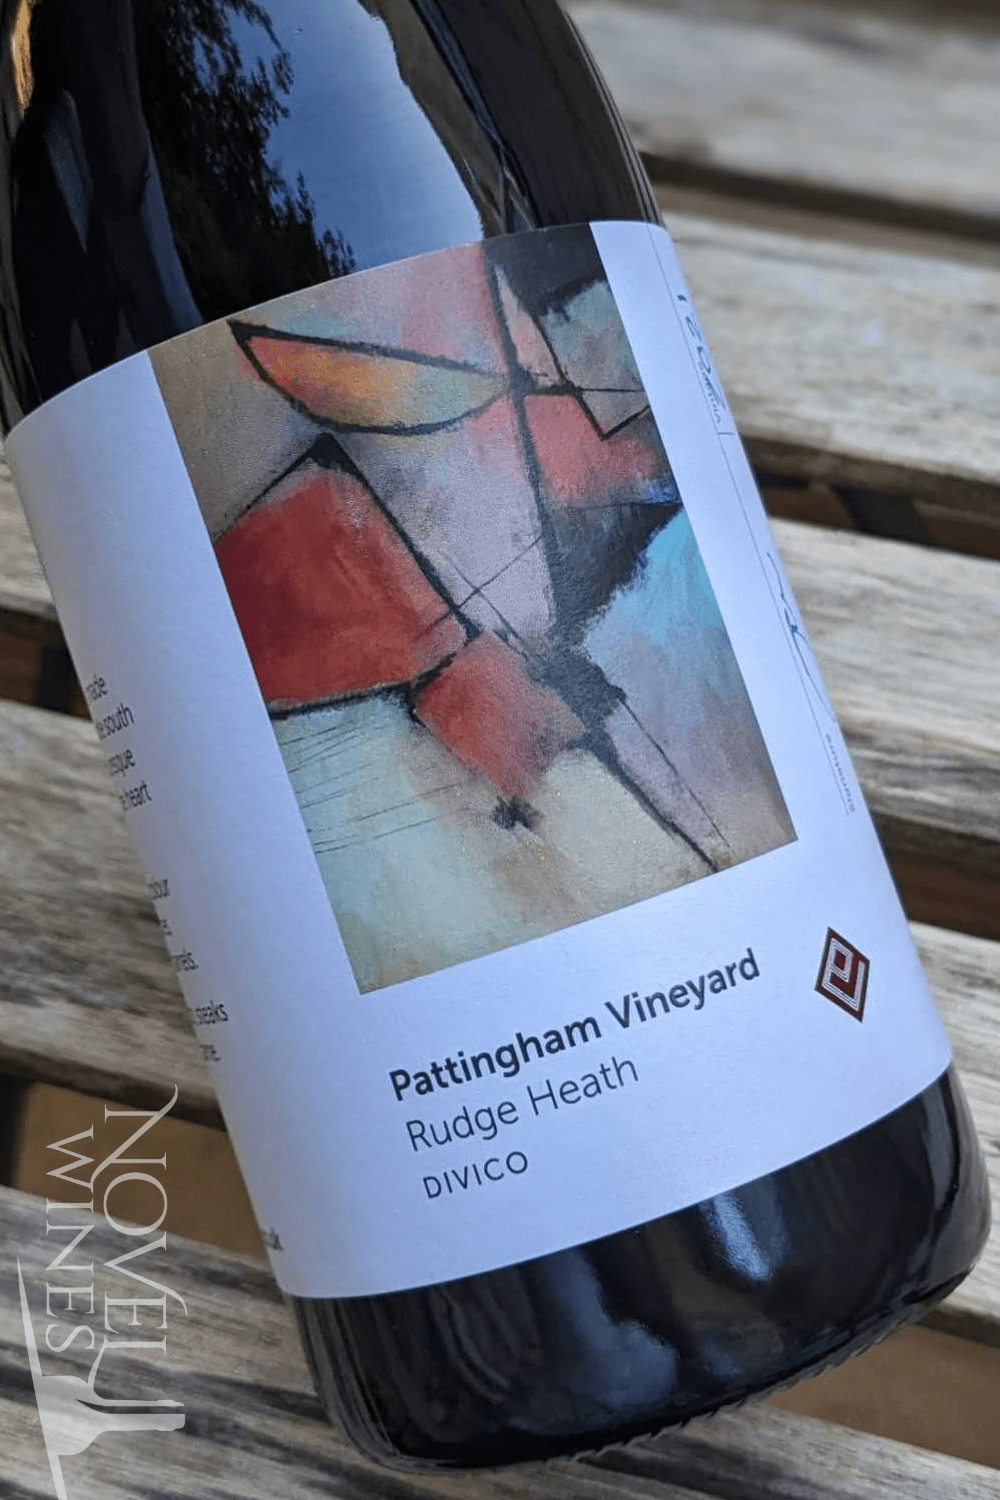 Pattingham Vineyard Red Wine Pattingham Vineyard 'Rudge Heath' Divico 2021, England